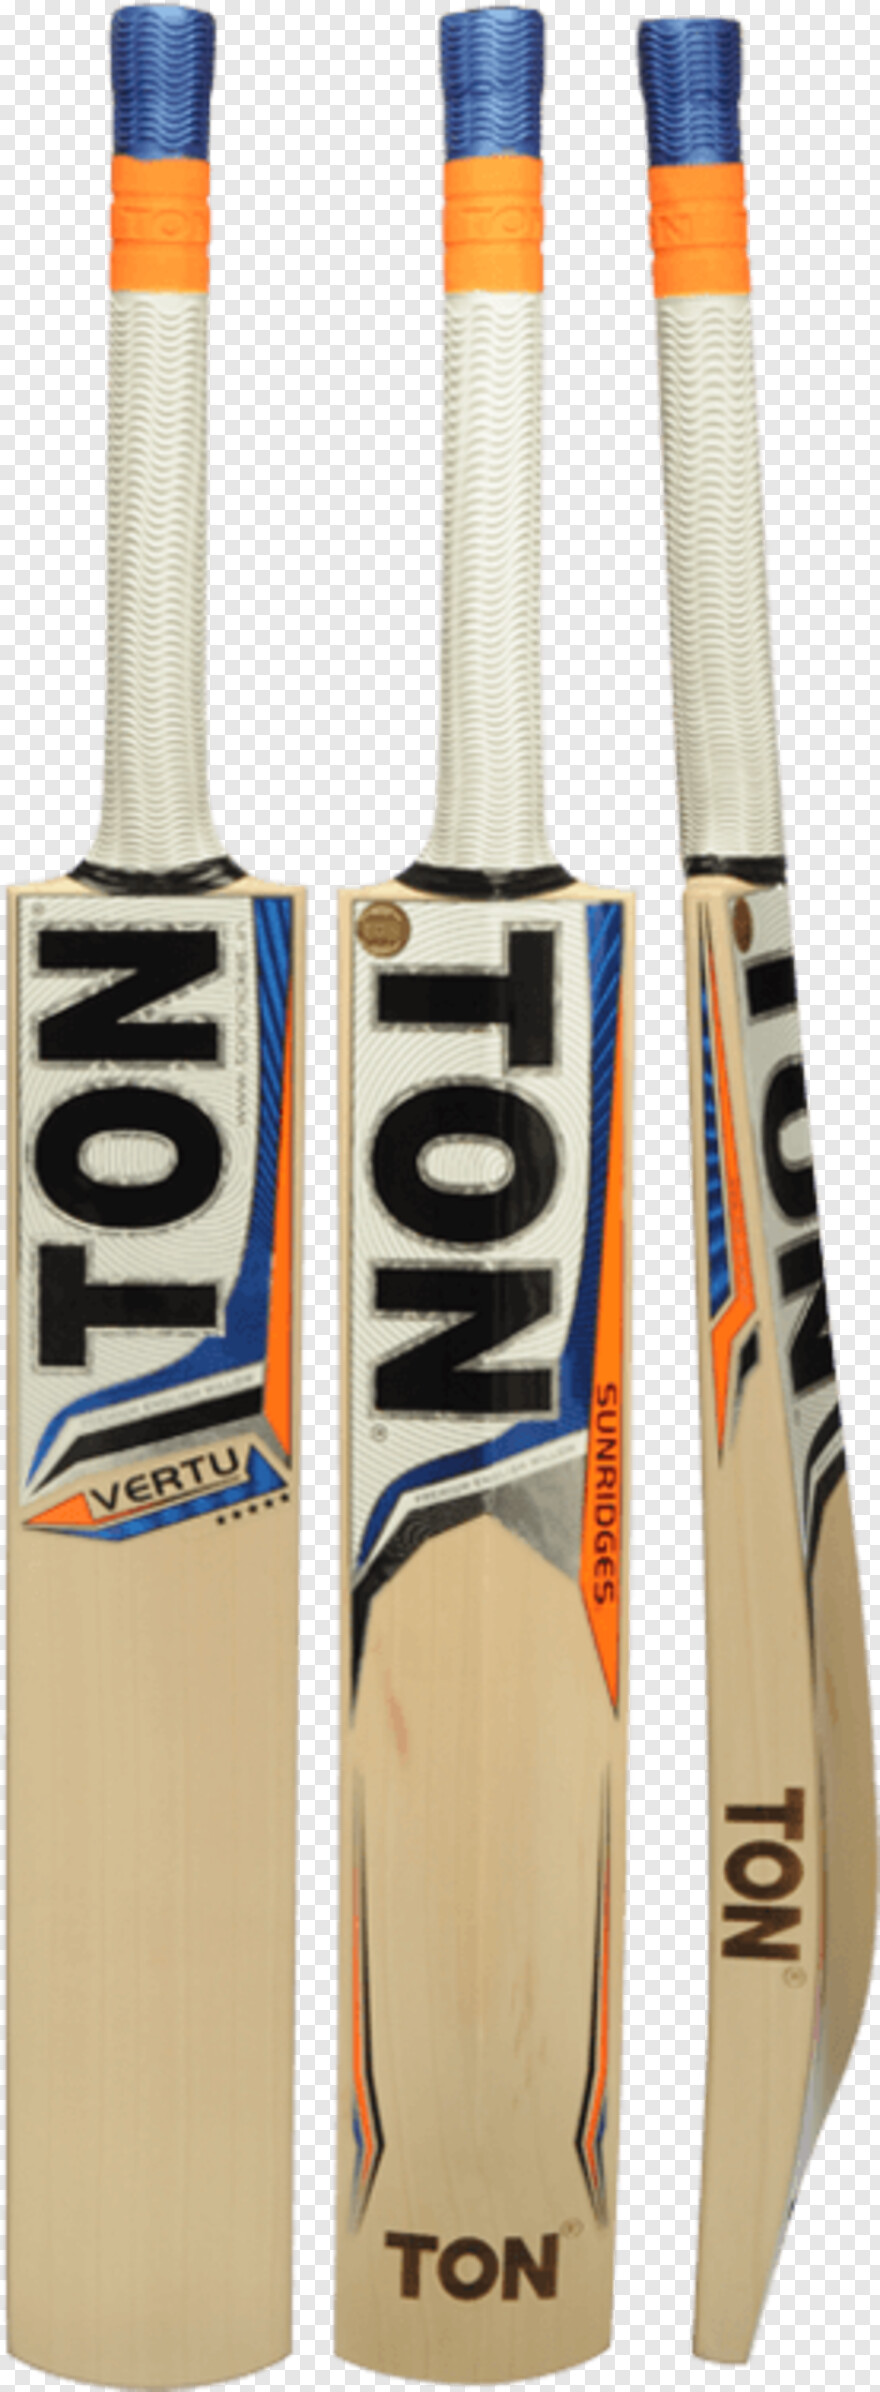  Cricket Kit, Cricket Images, Cricket Vector, Cricket Cup, Cricket Clipart, Cricket Bat And Ball